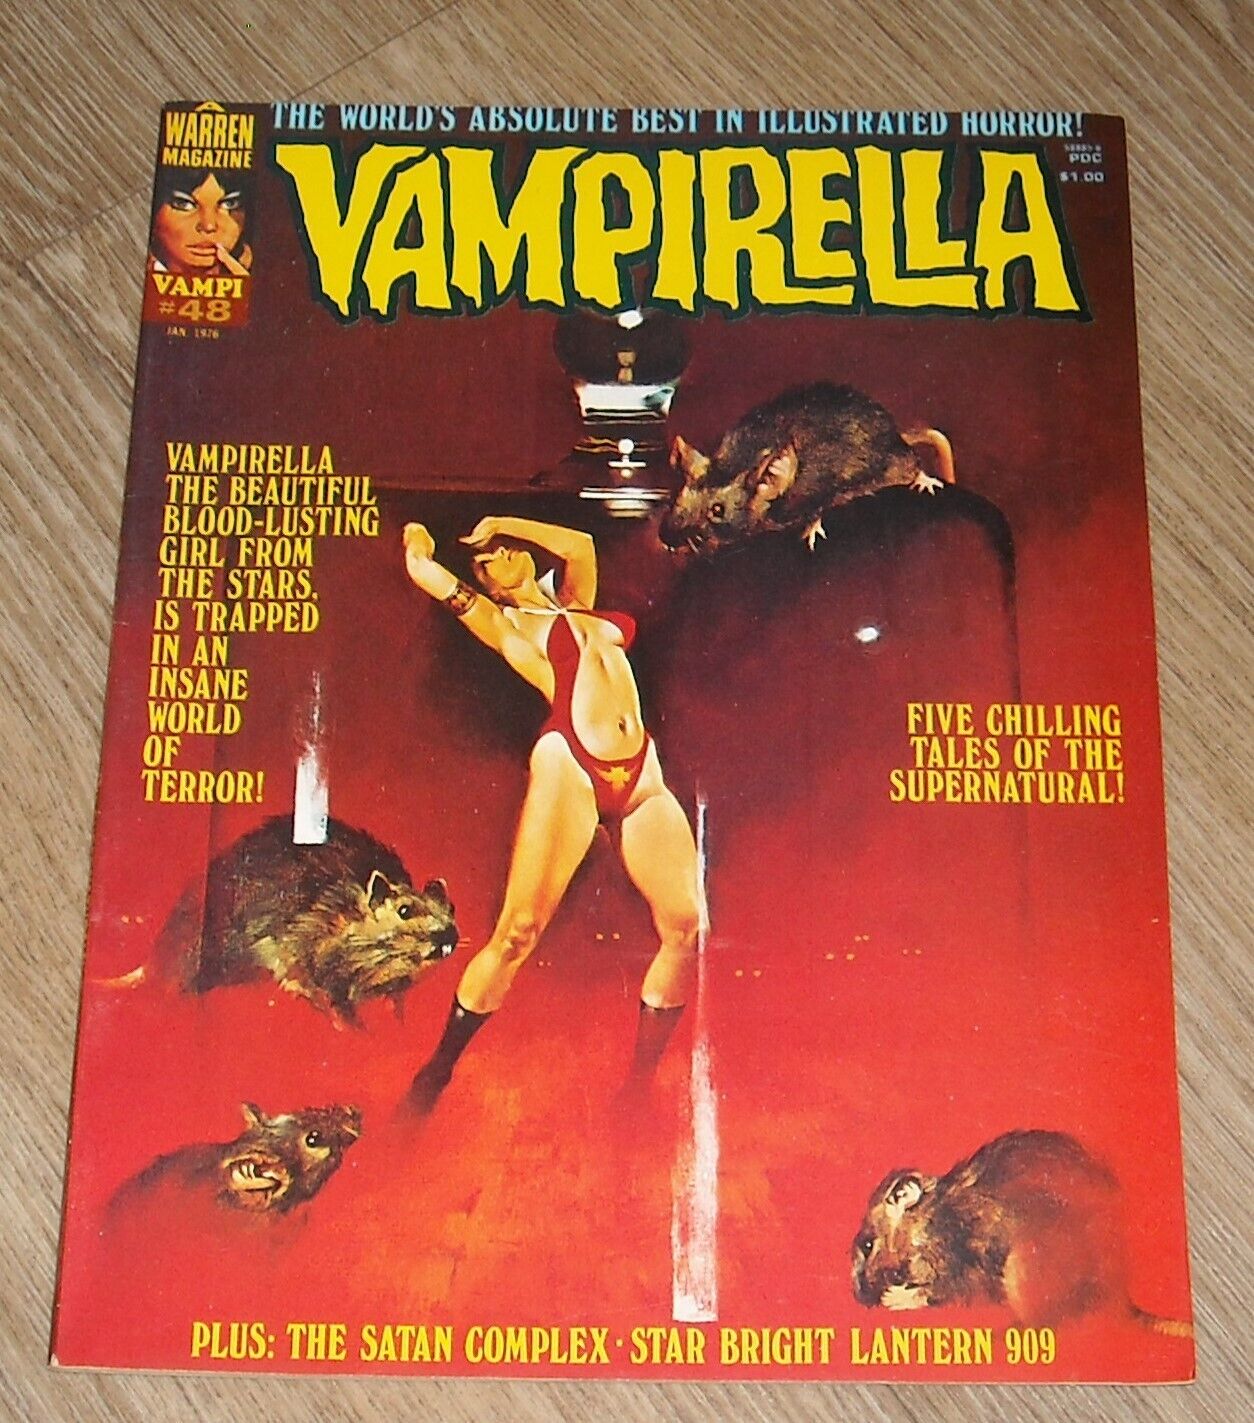 VAMPIRELLA # 48 MAGAZINE WARREN PUBLISHING January 1976 ENRICH COVER 5 STORIES